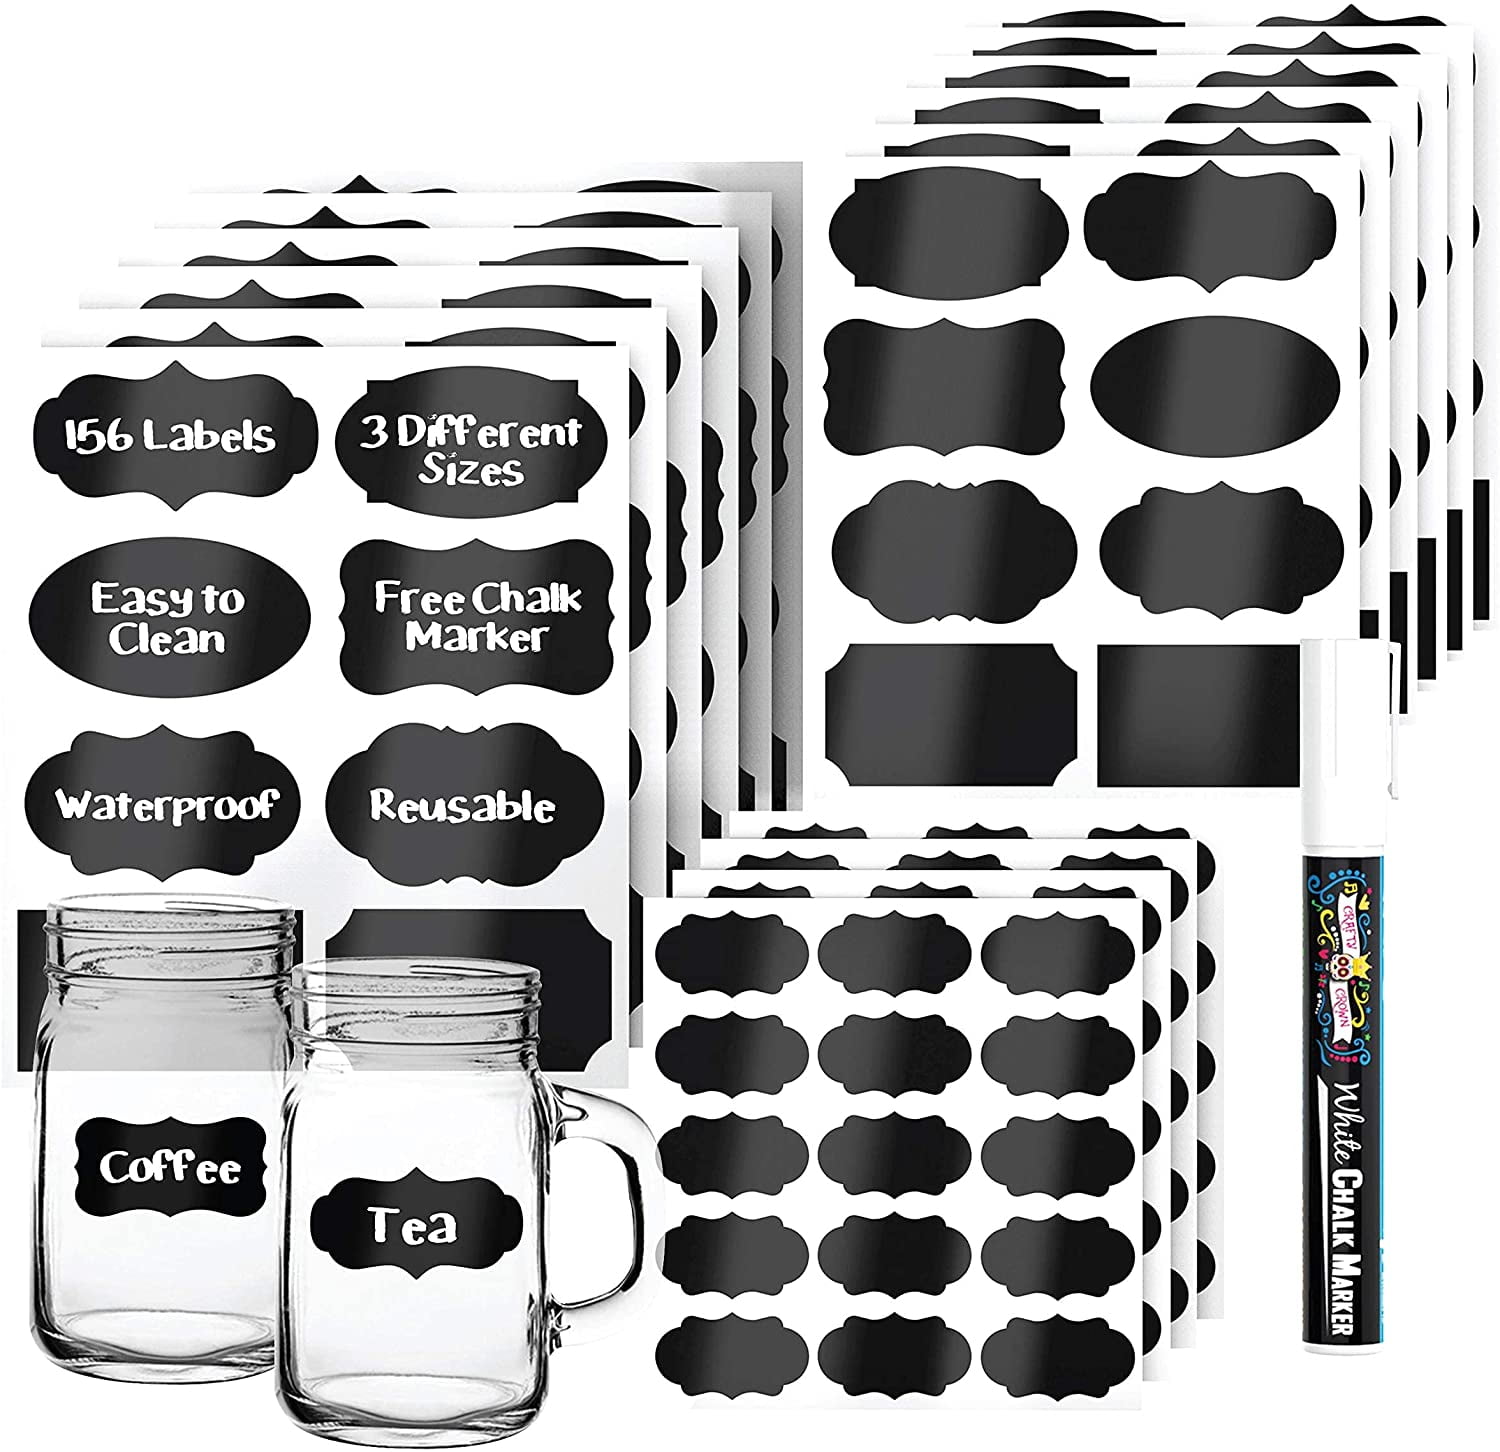 Glass Jars LGT 80 X Black Shaped 9cm x 5cm Waterproof Reusable Blackboard Chalk Board Stickers Labels for Craft 